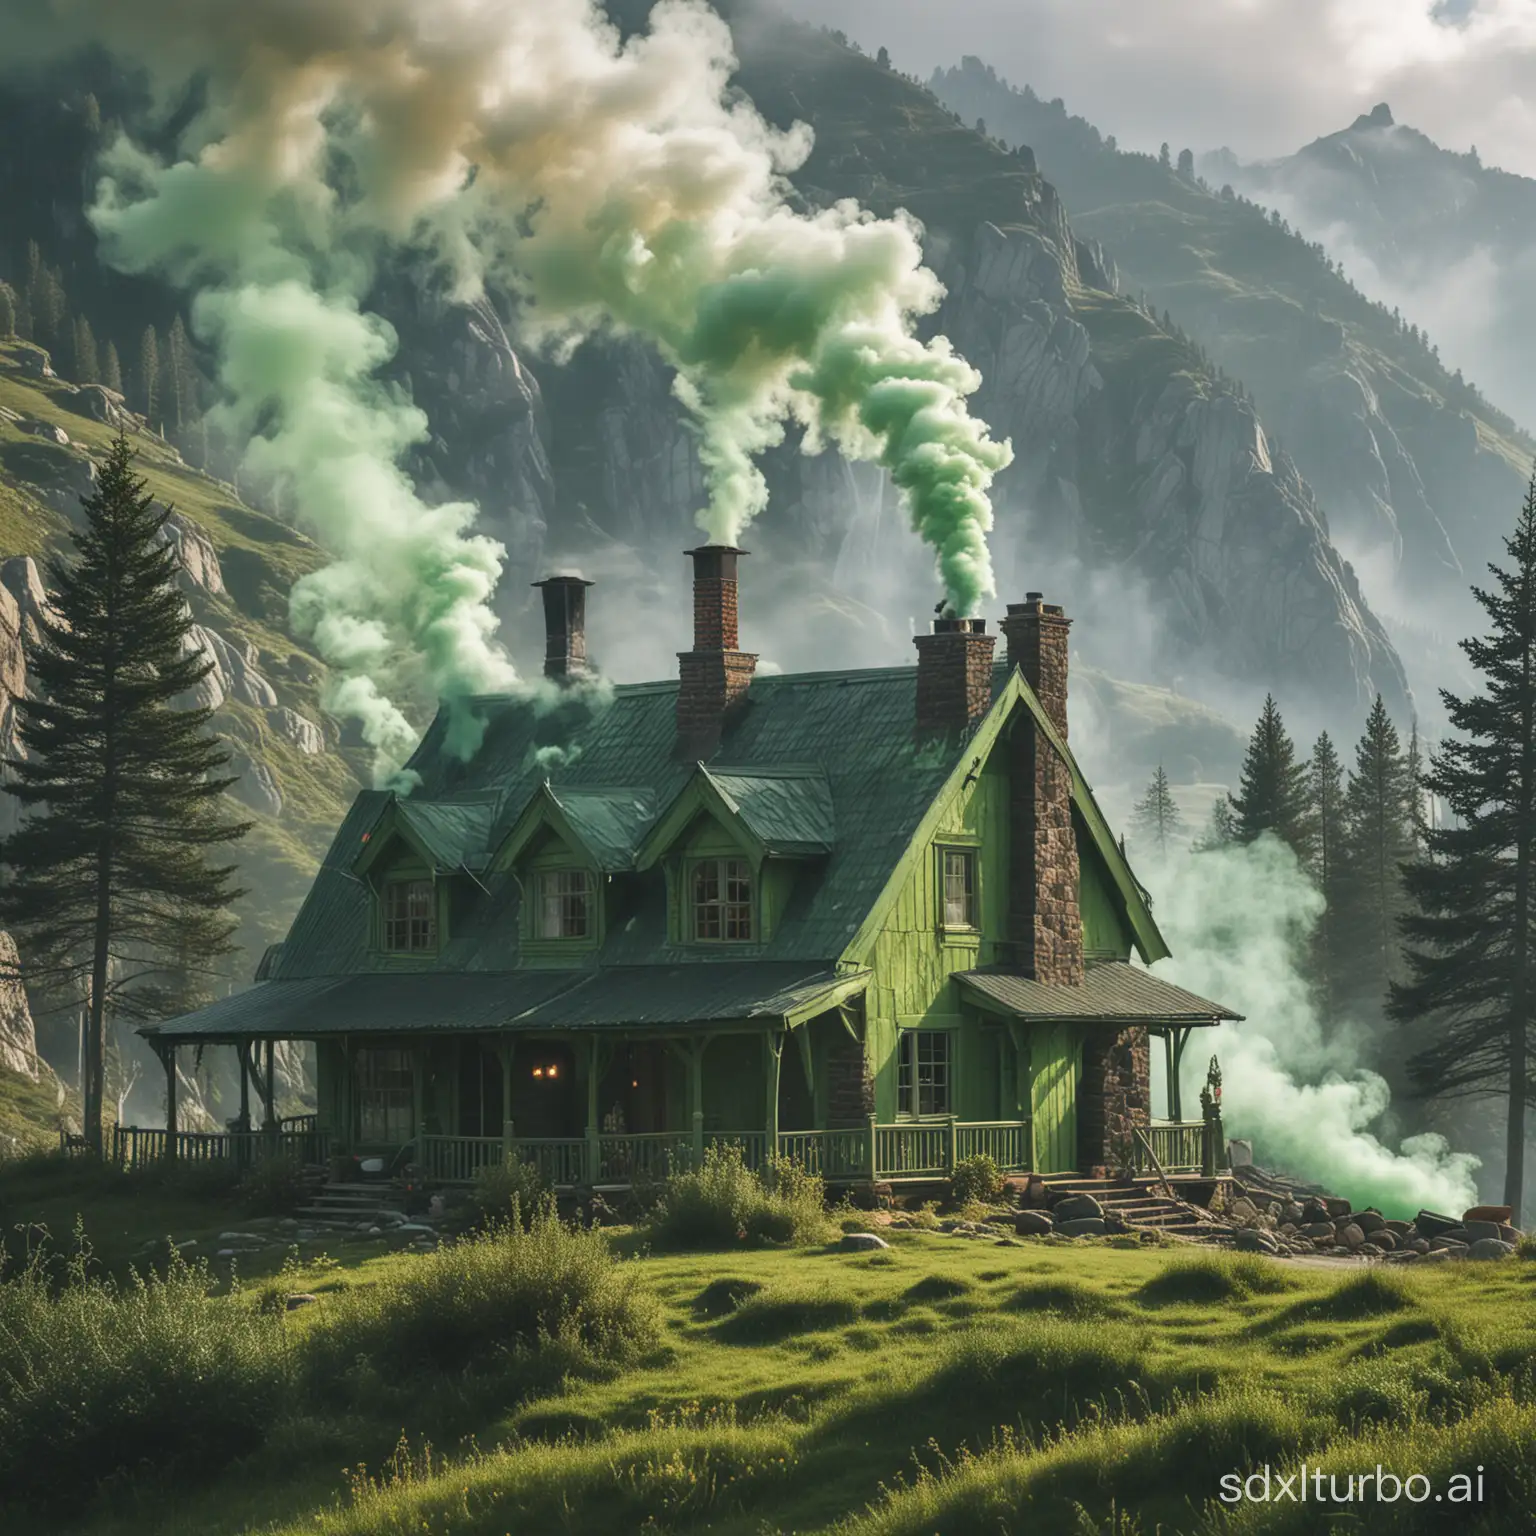 Grinch-Climbing-Mountain-with-Two-Chimneys-Emitting-Green-Smoke